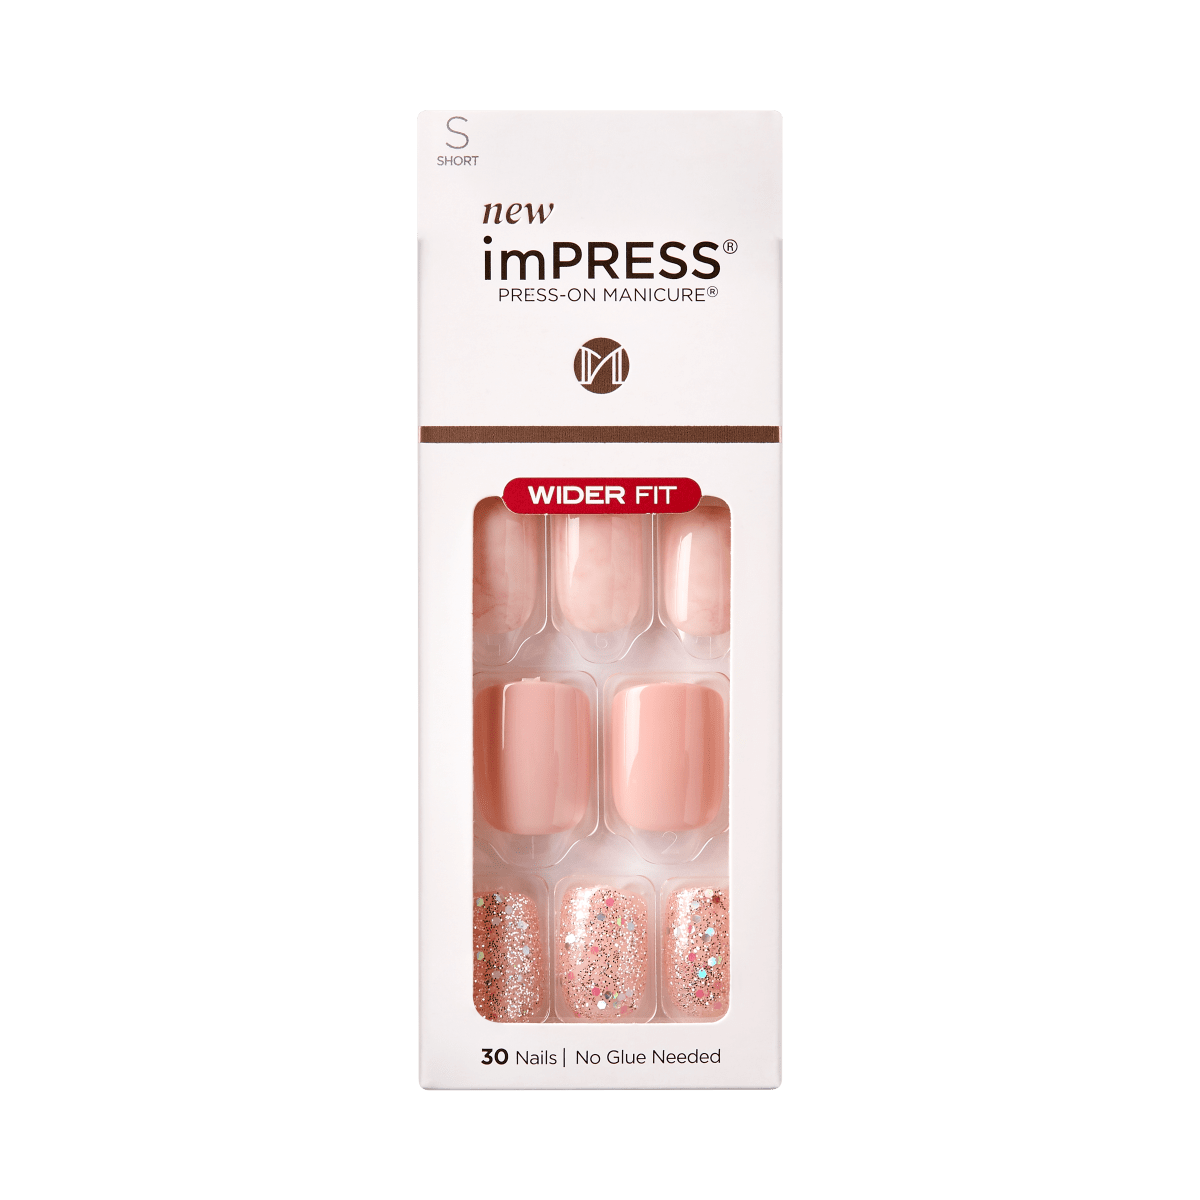 imPRESS Press-On Manicure - Wide Fit - Just a Dream